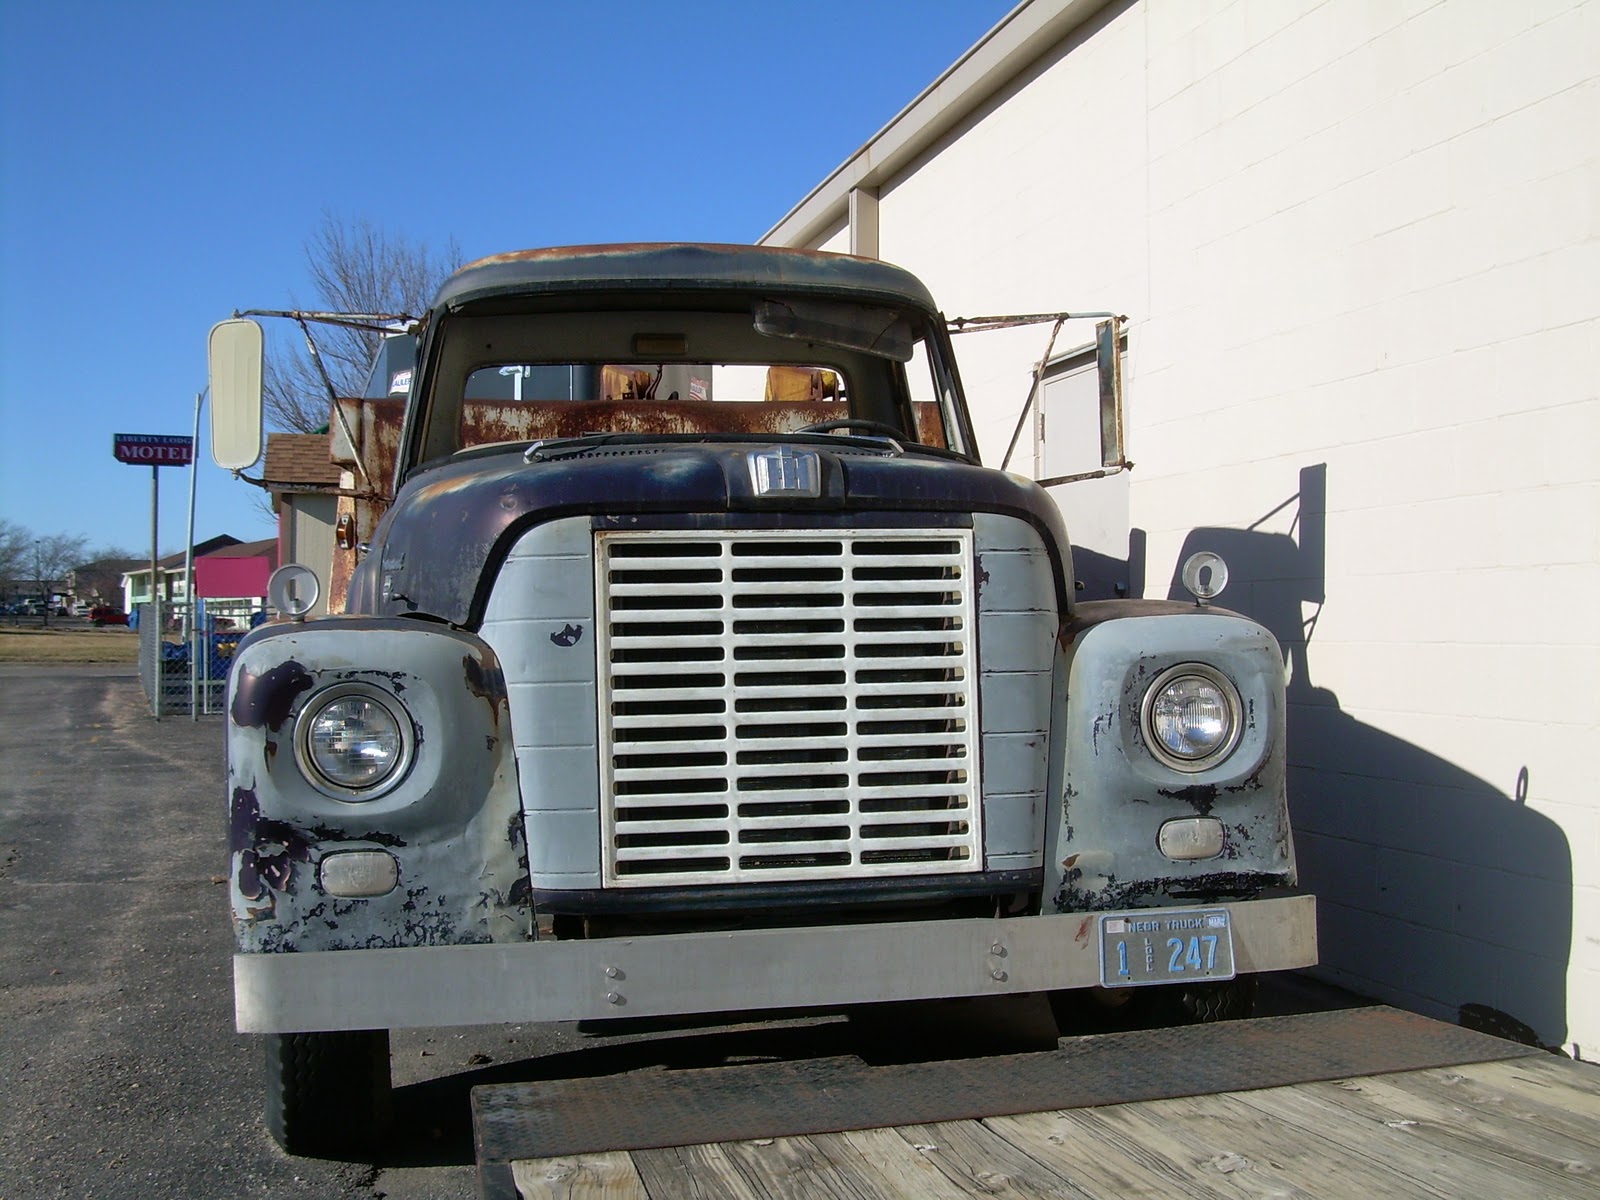 Old Parked Cars Nebraska: 1965 International Harvester Loadstar 1600